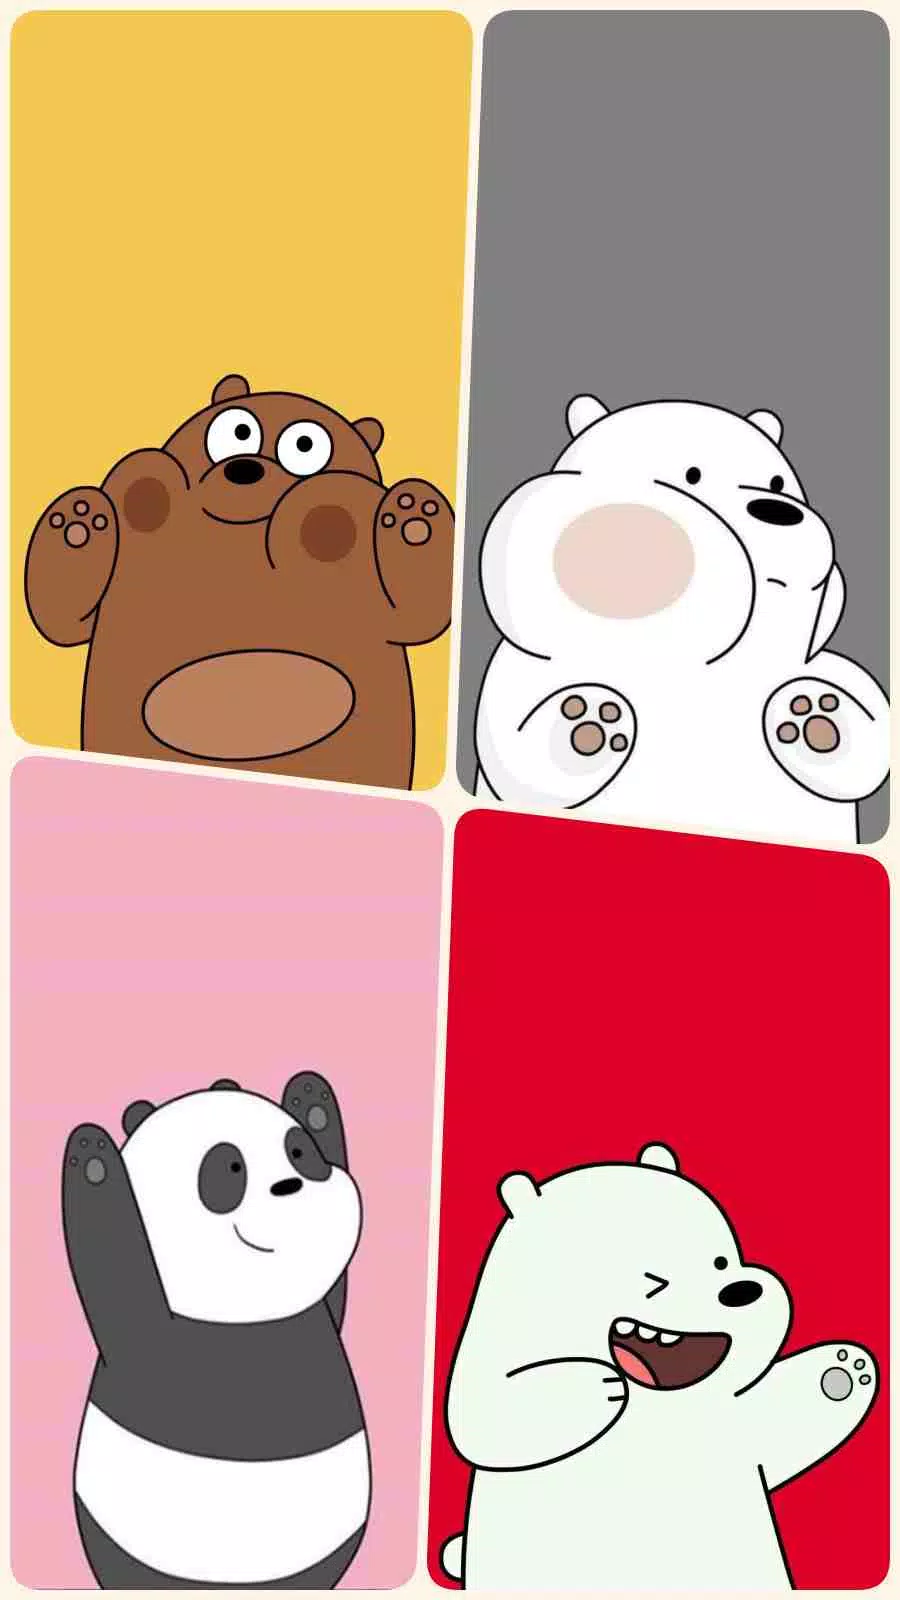 Tải xuống APK Kawaii Bear Wallpapers | Cute Backgrounds cho Android